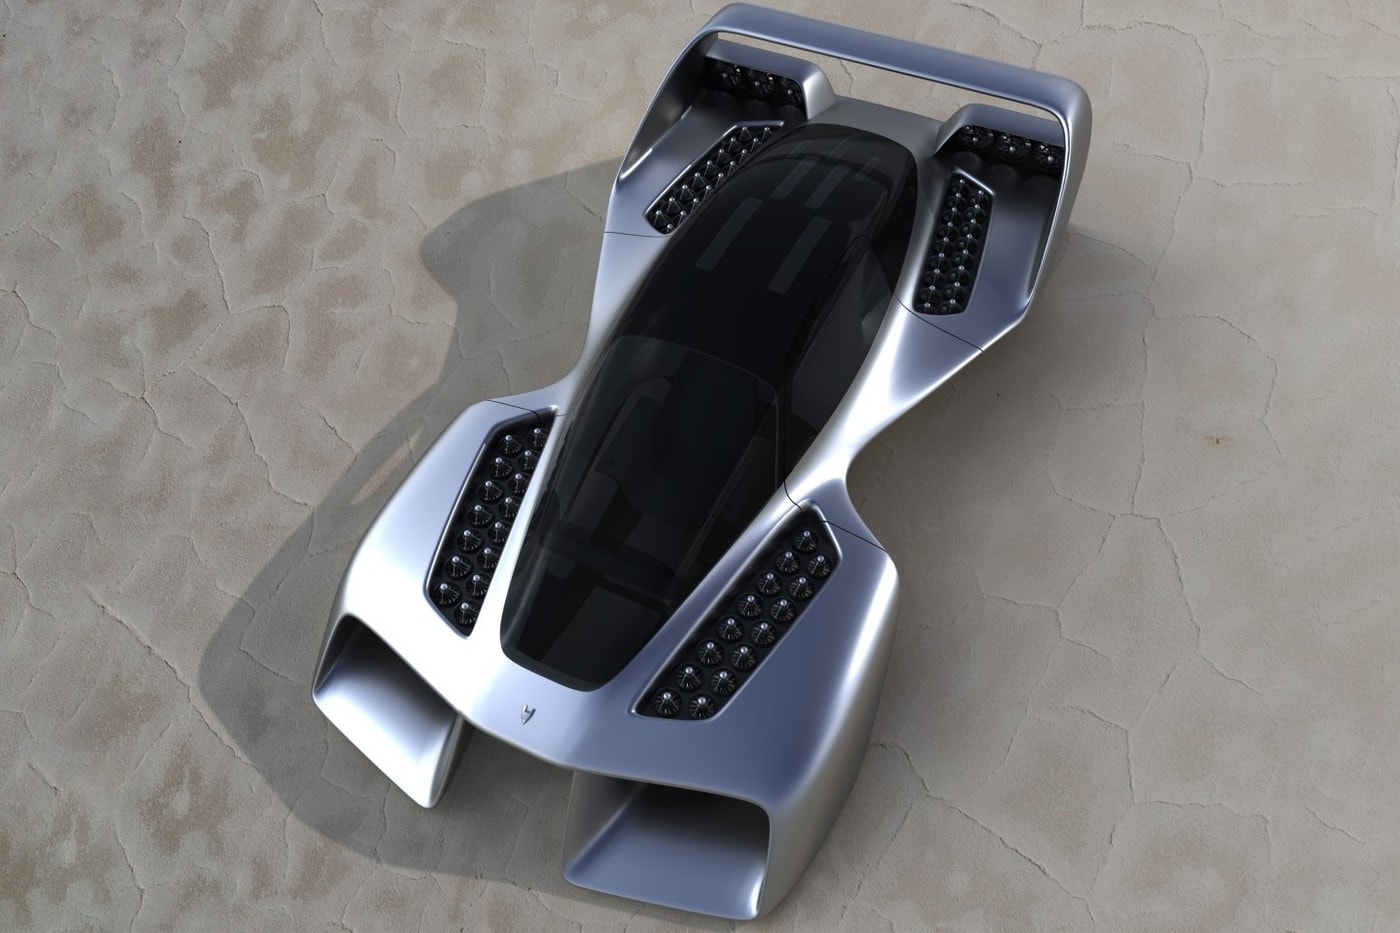 Urban eVTOL 展示全新電能飛行概念車「LEO Coupe」